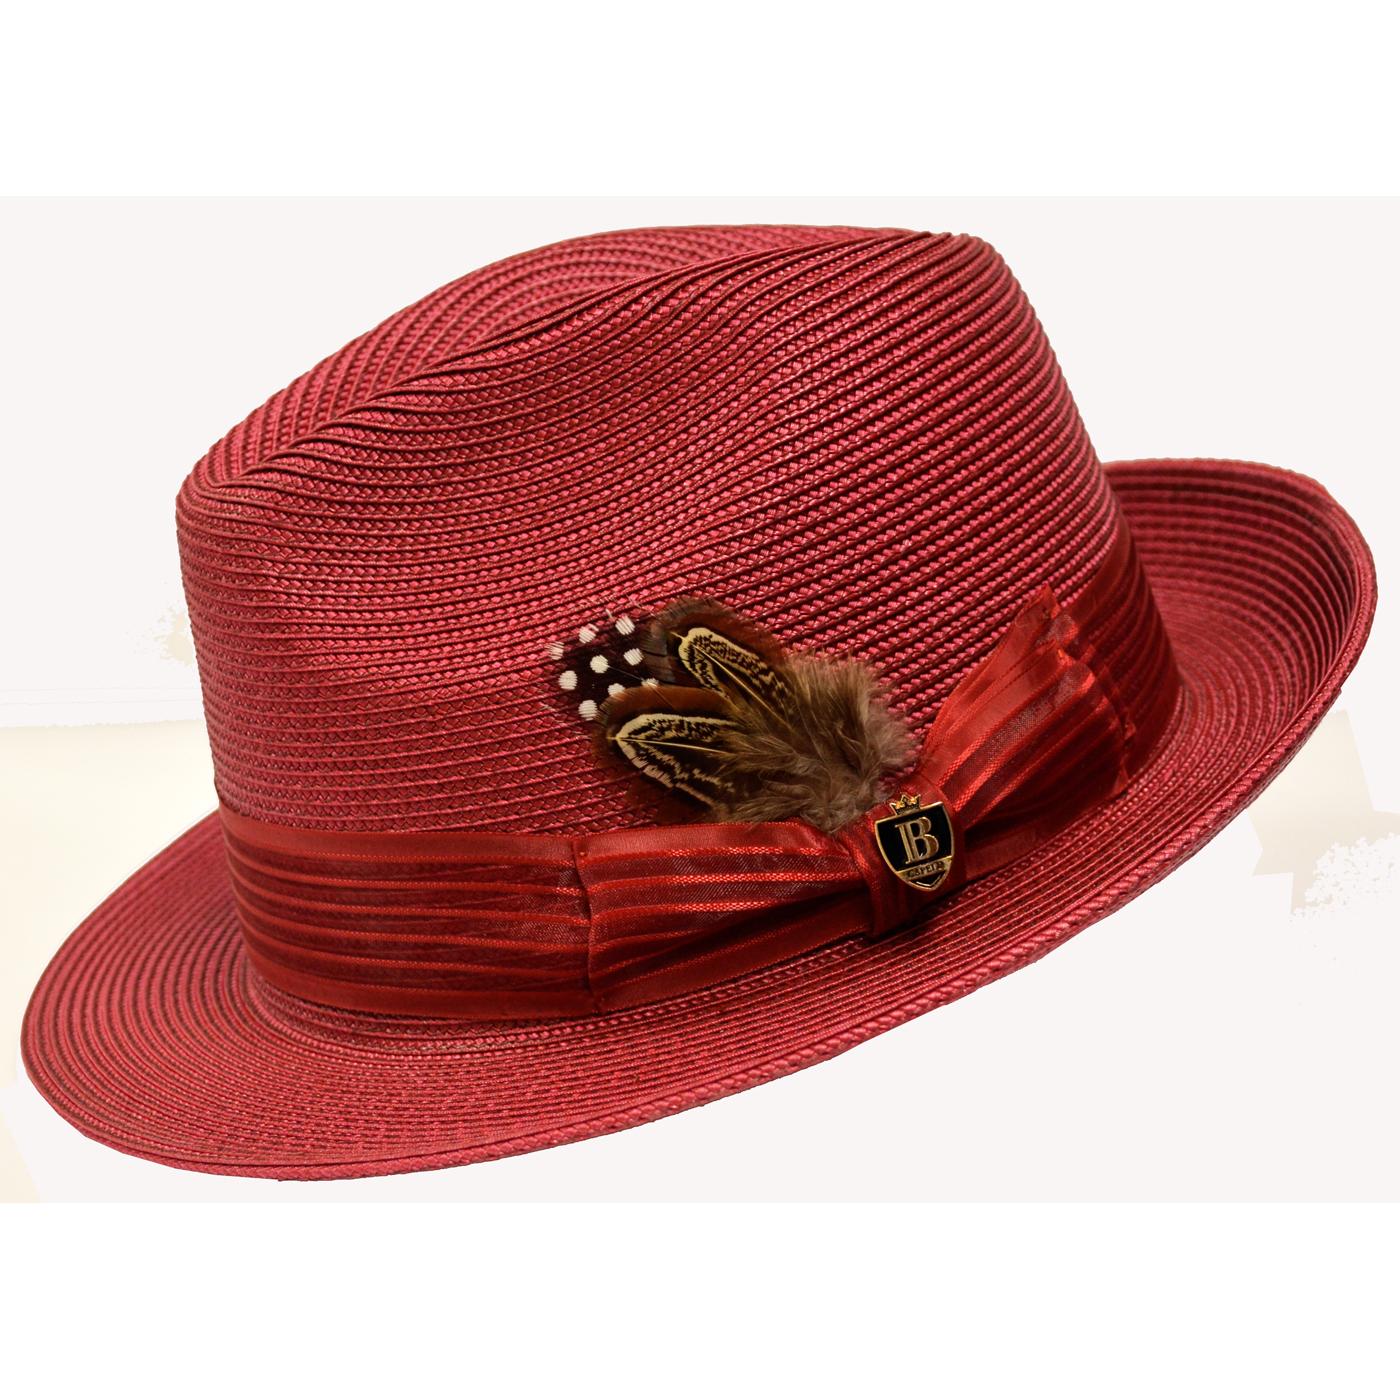 Bruno Capelo Burgundy Fedora Braided Straw Hat BC-615 - $49.90 ...